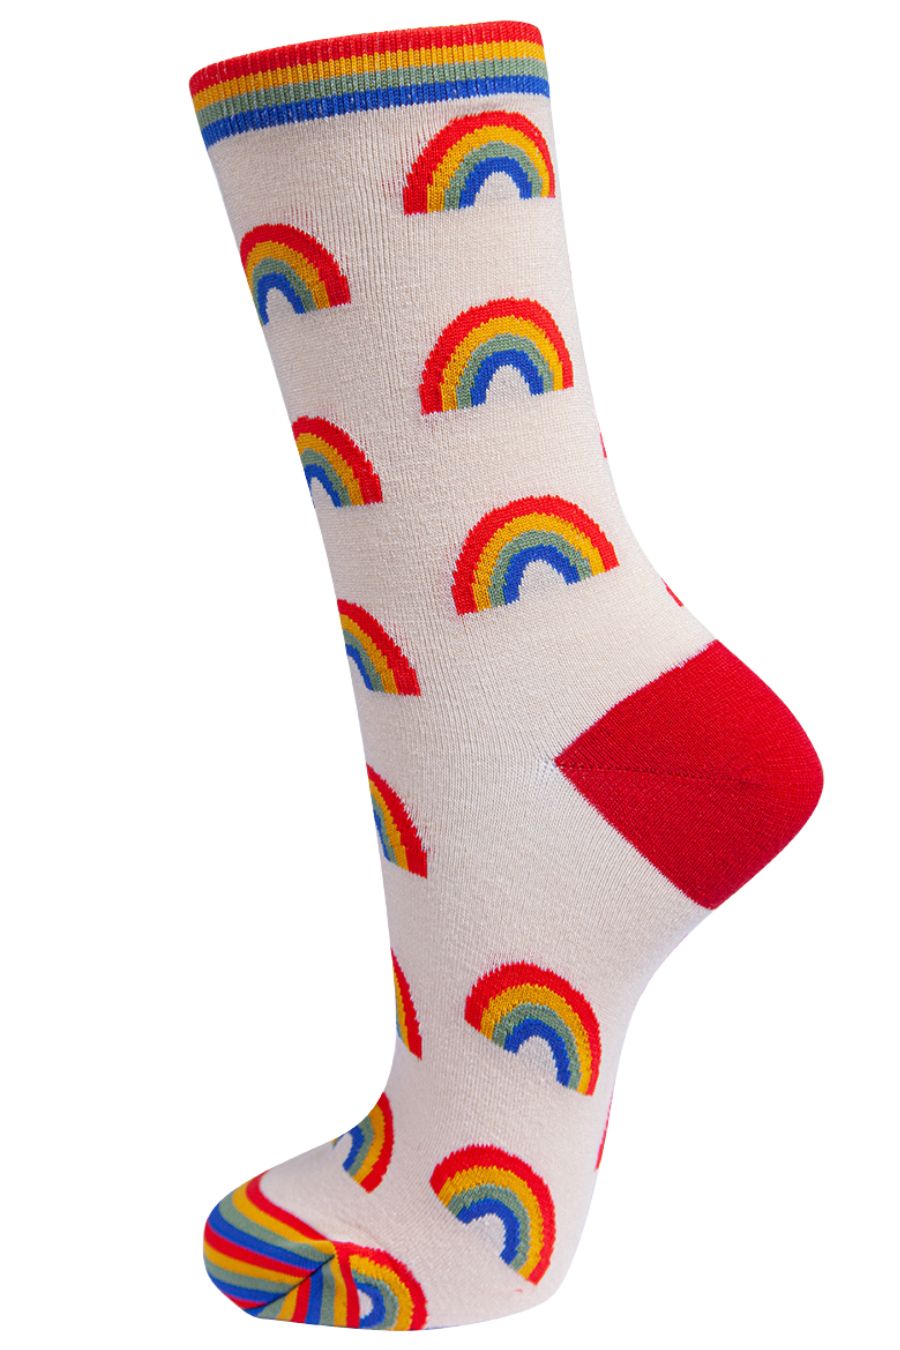 Womens Rainbow Bamboo Socks Novelty Ankle Socks Cream Red